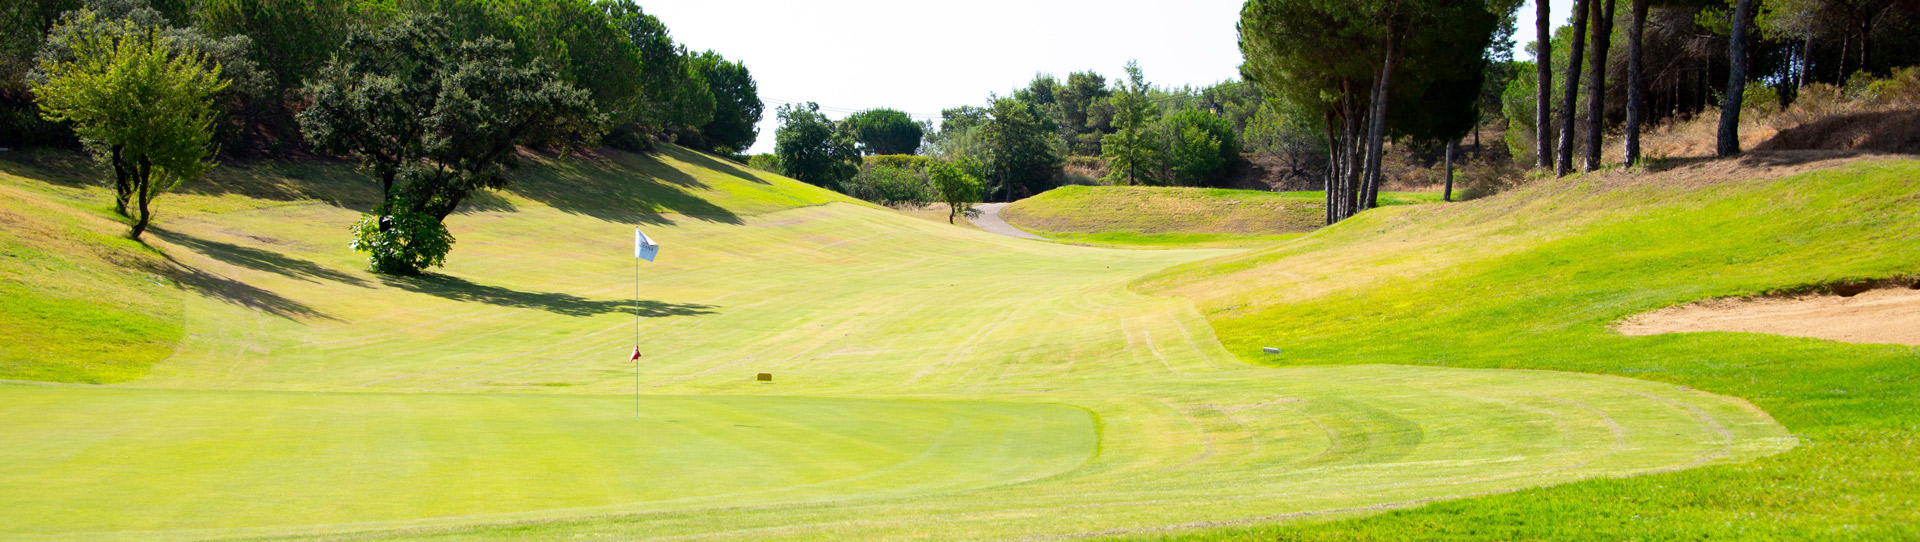 Portugal golf courses - Castro Marim Golf Course - Photo 2